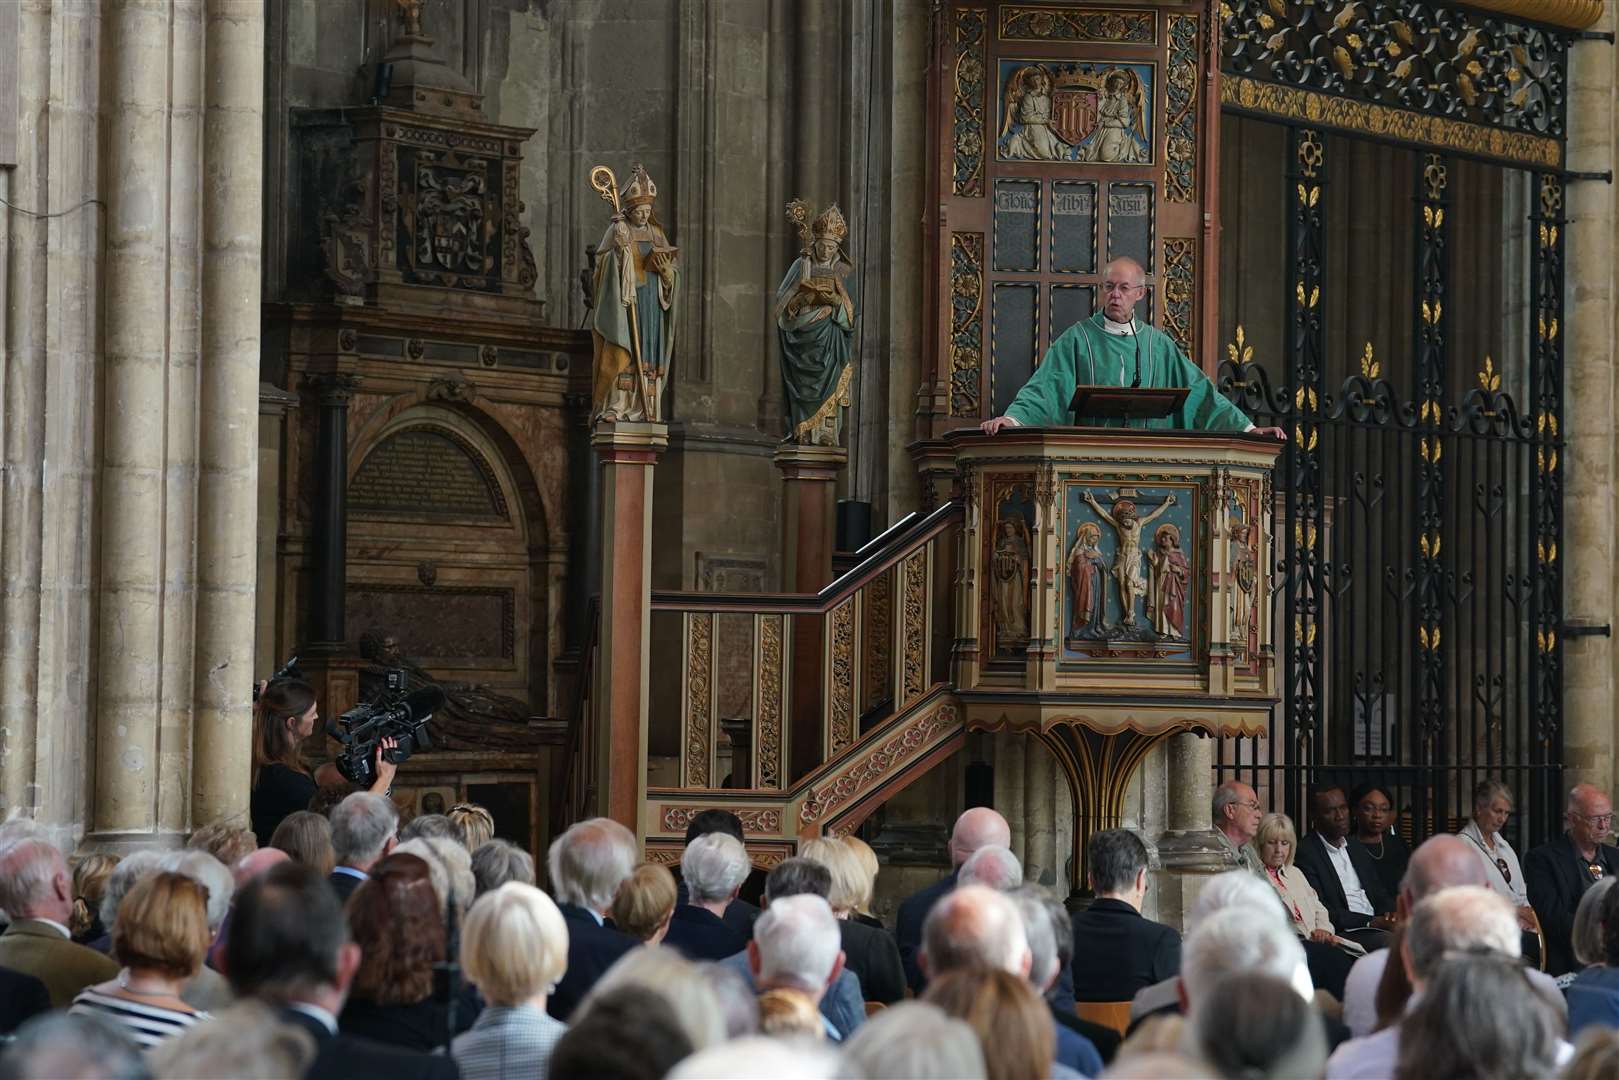 The Archbishop of Canterbury at a special service at Canterbury Cathedral (Gareth Fuller/PA)